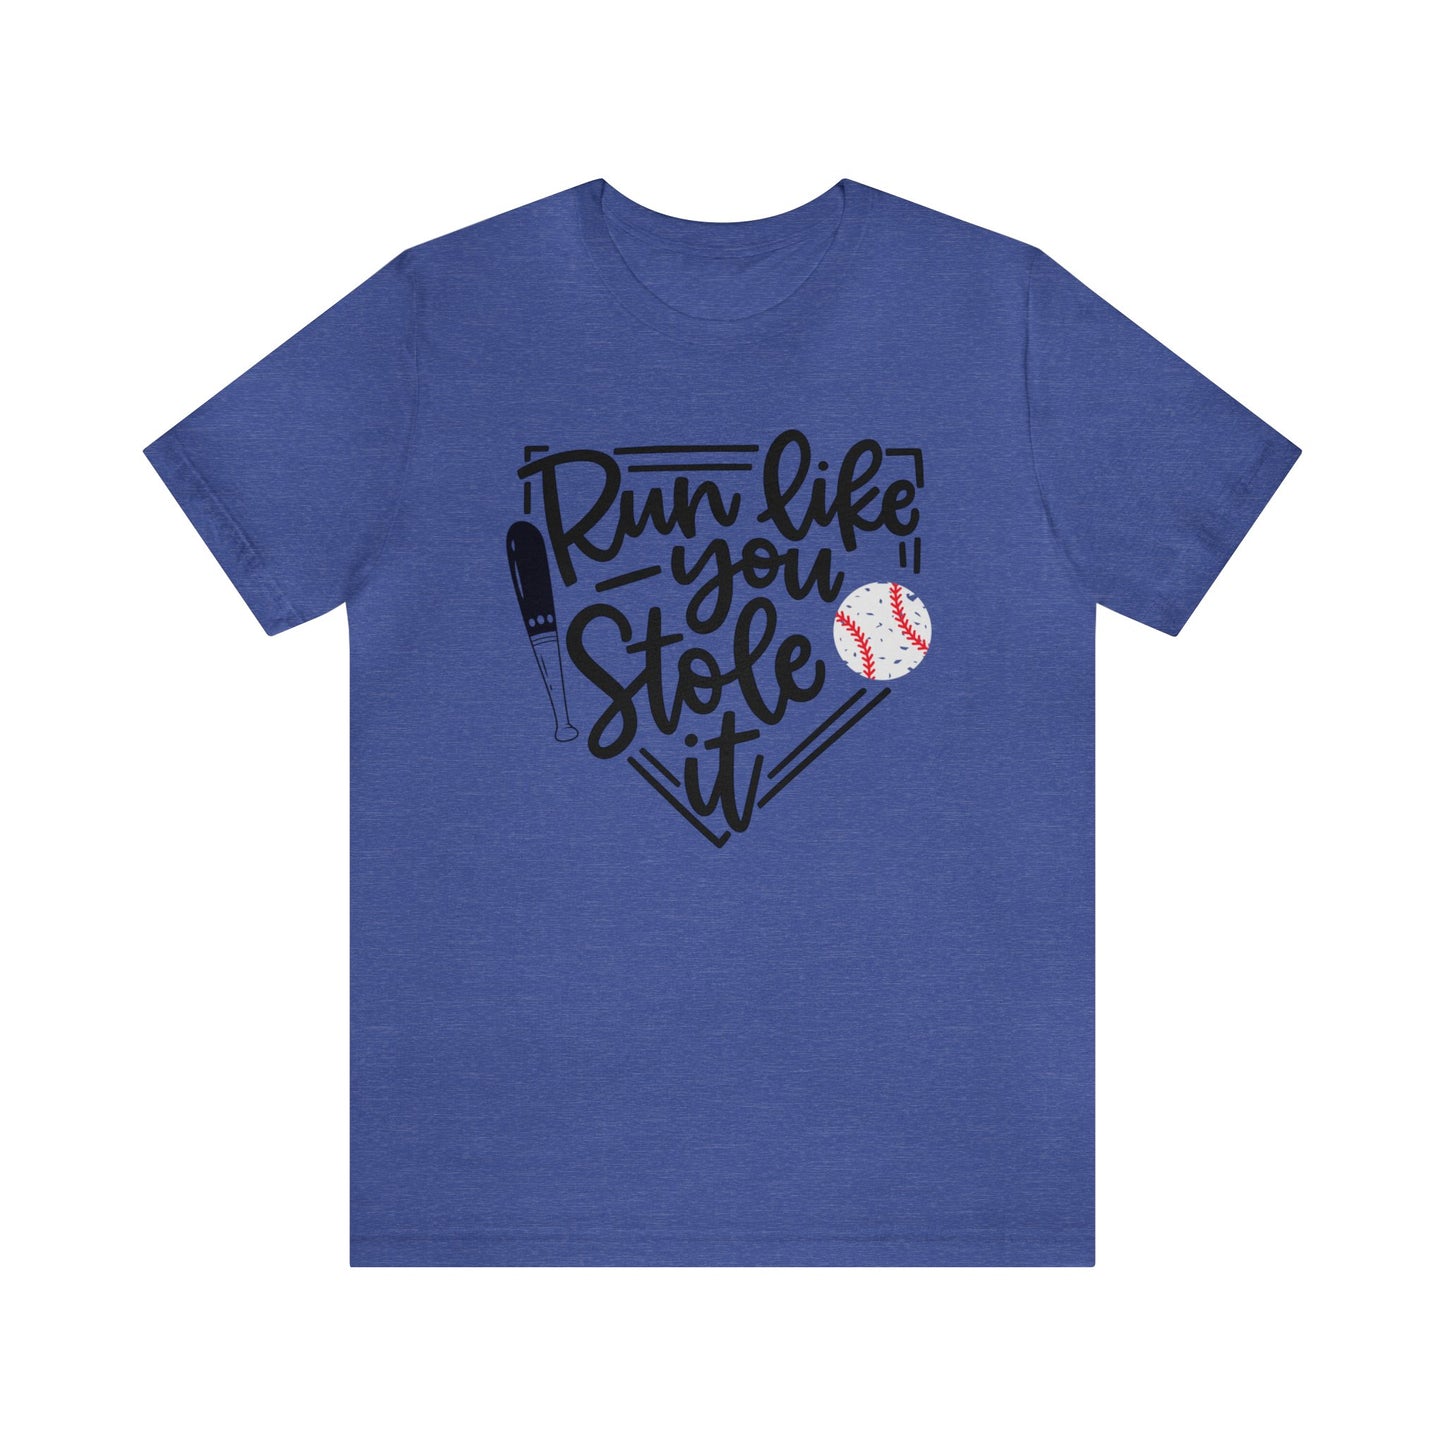 Run like you stole it, Baseball - Short Sleeve Tee